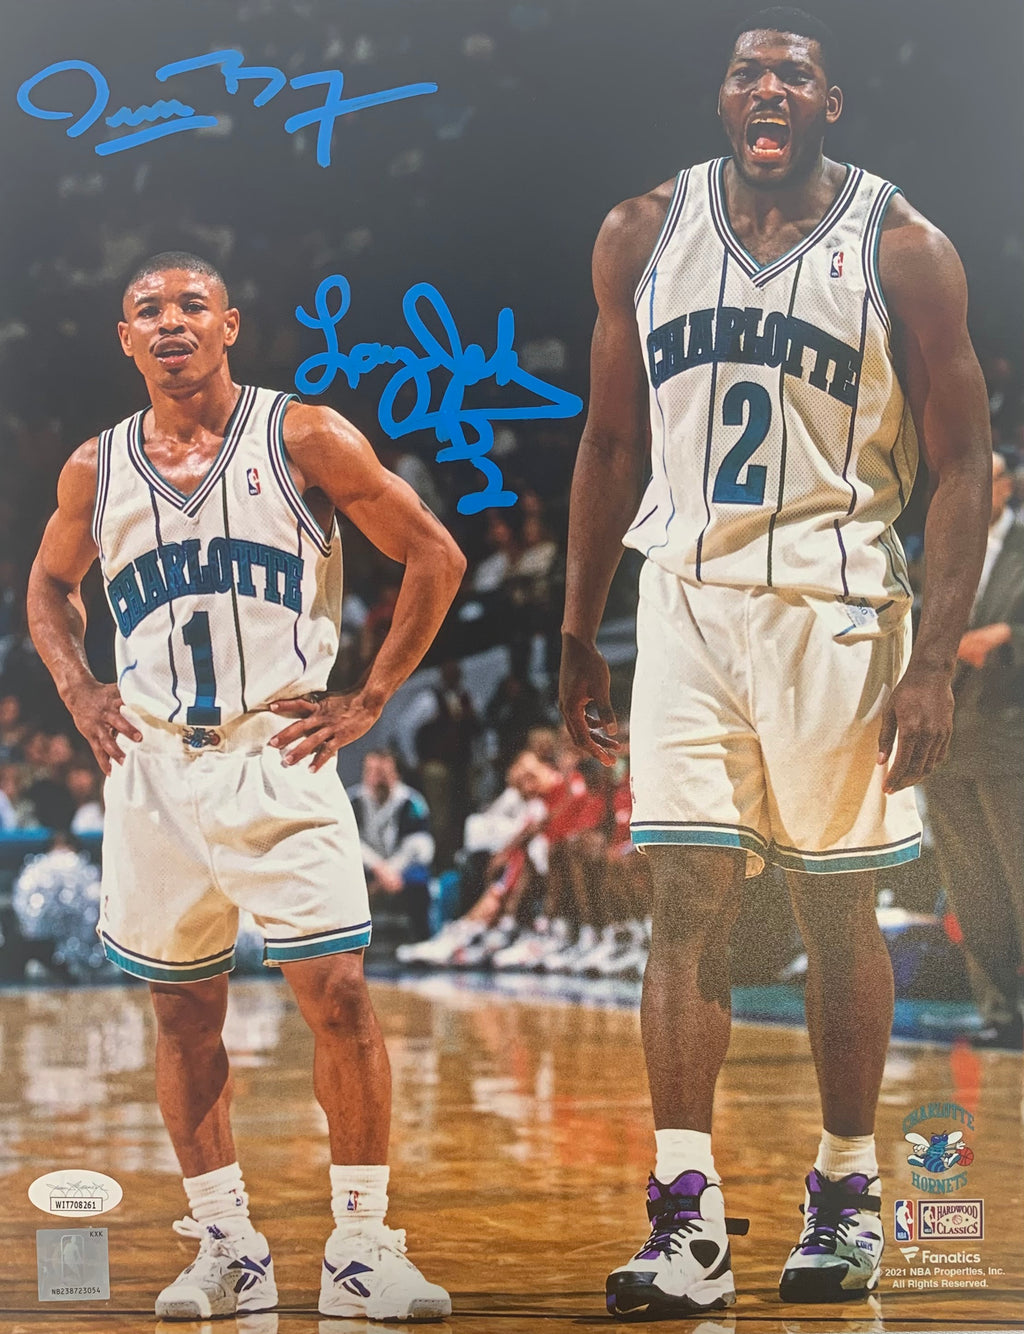 Allen Iverson Shawn Kemp auto signed 11x14 photo 76ers Cavaliers NBA P –  JAG Sports Marketing